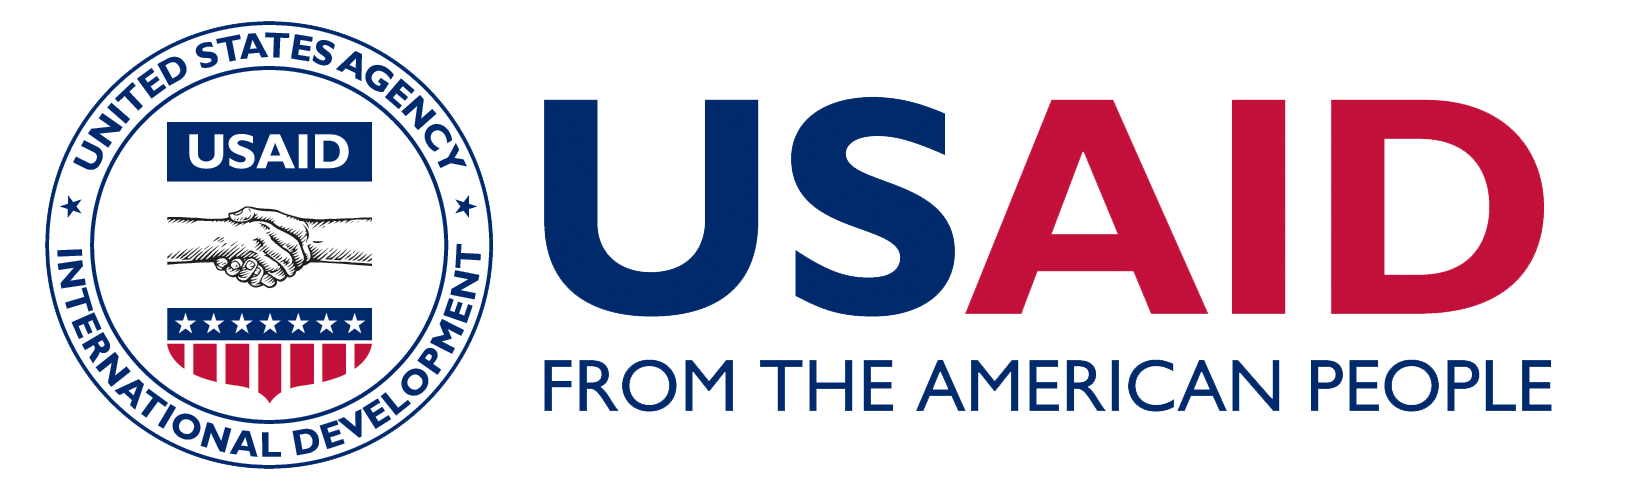 Us_aid_logo